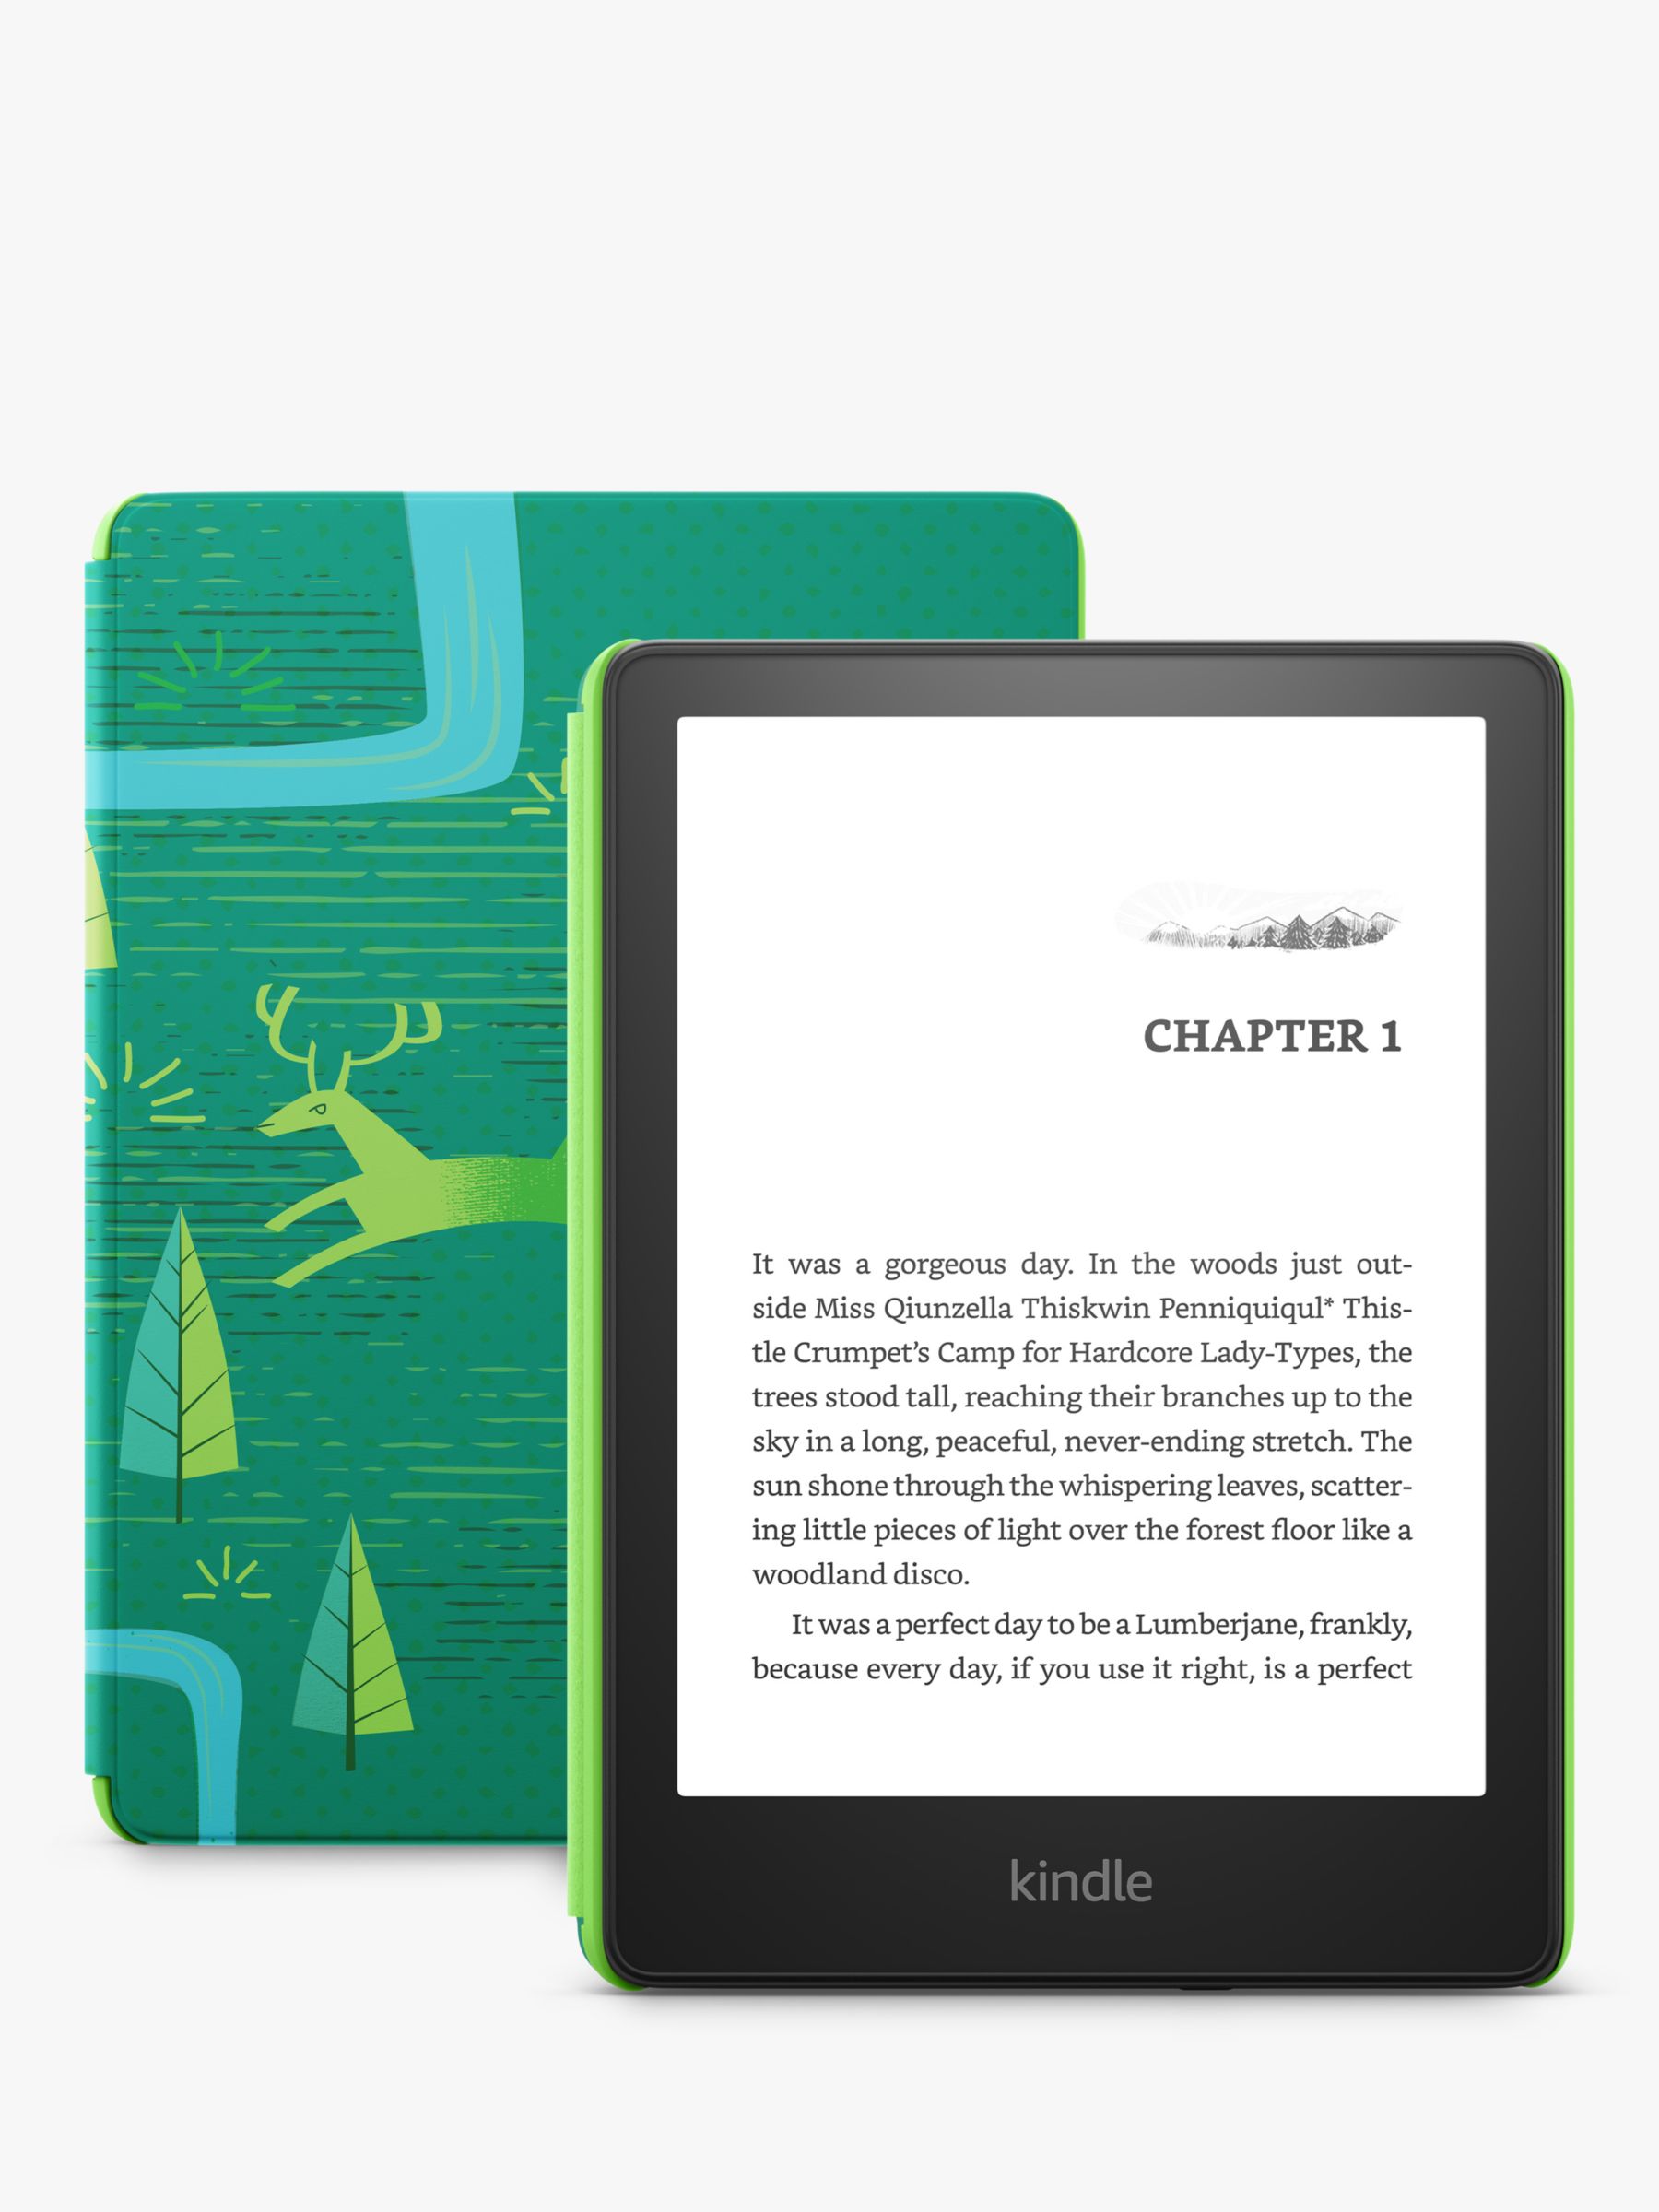 Kindle Paperwhite 6.8″ display and adjustable warm light –